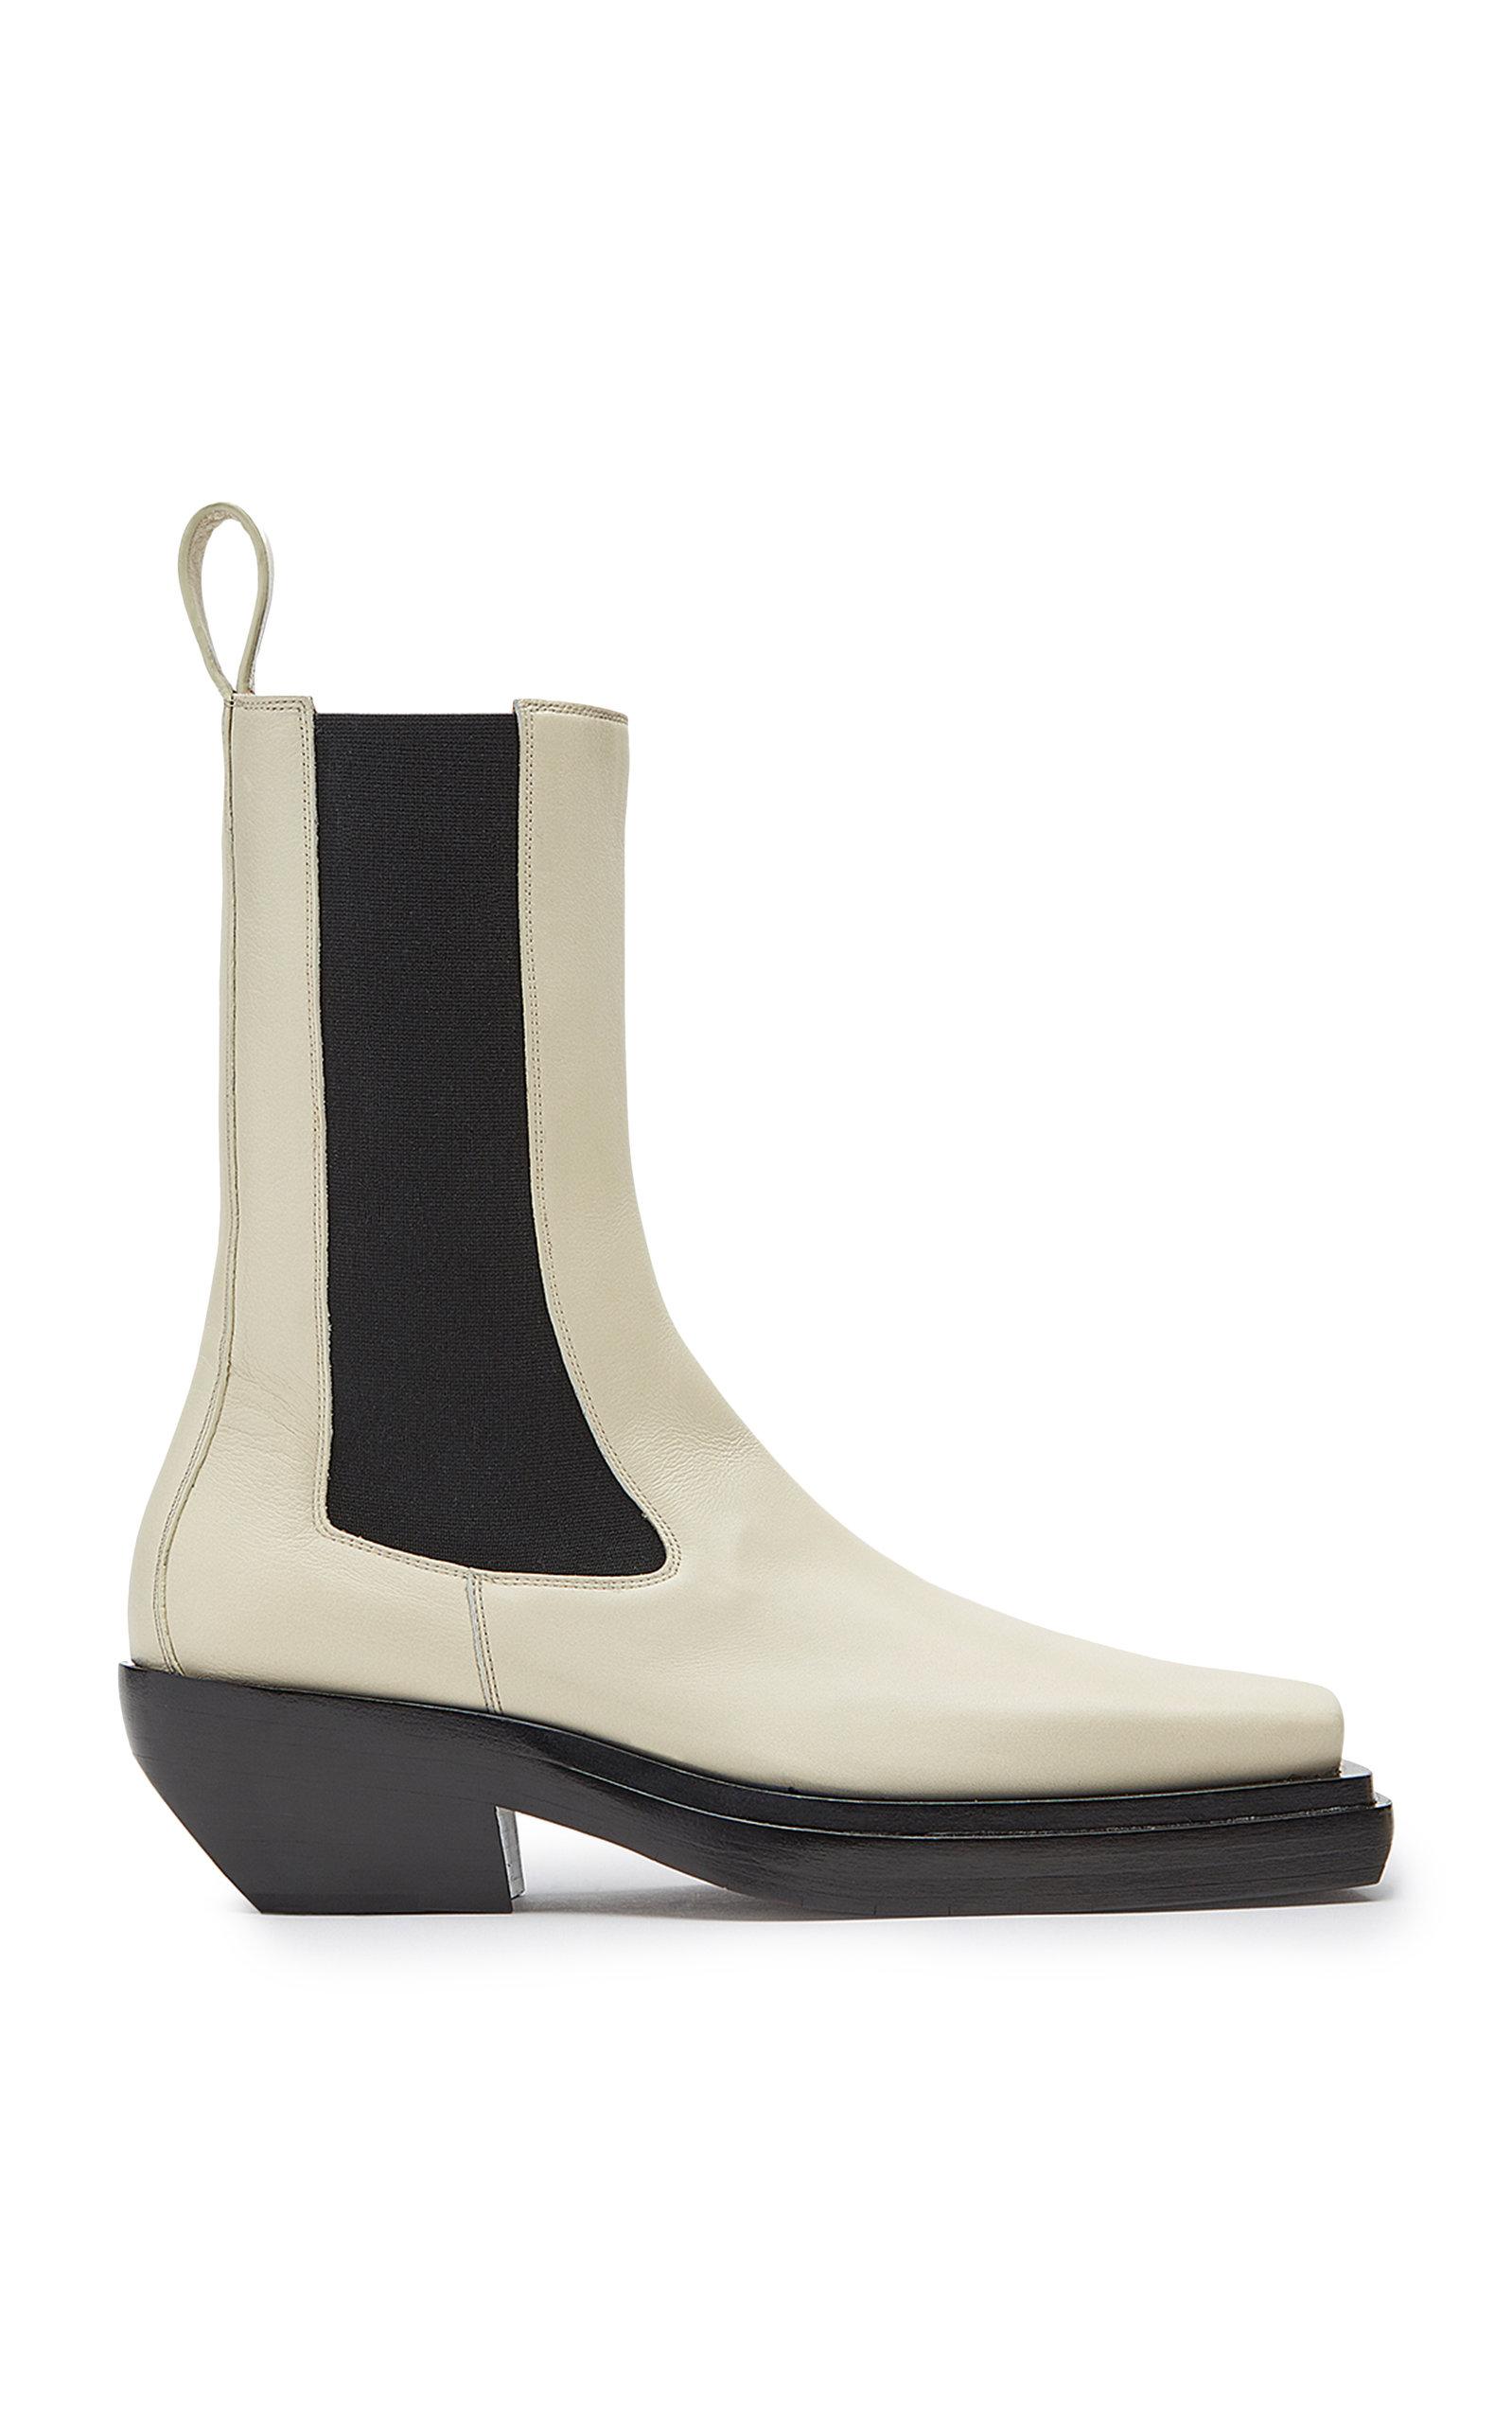 Bottega Veneta The Lean Chelsea Boots in White | Lyst